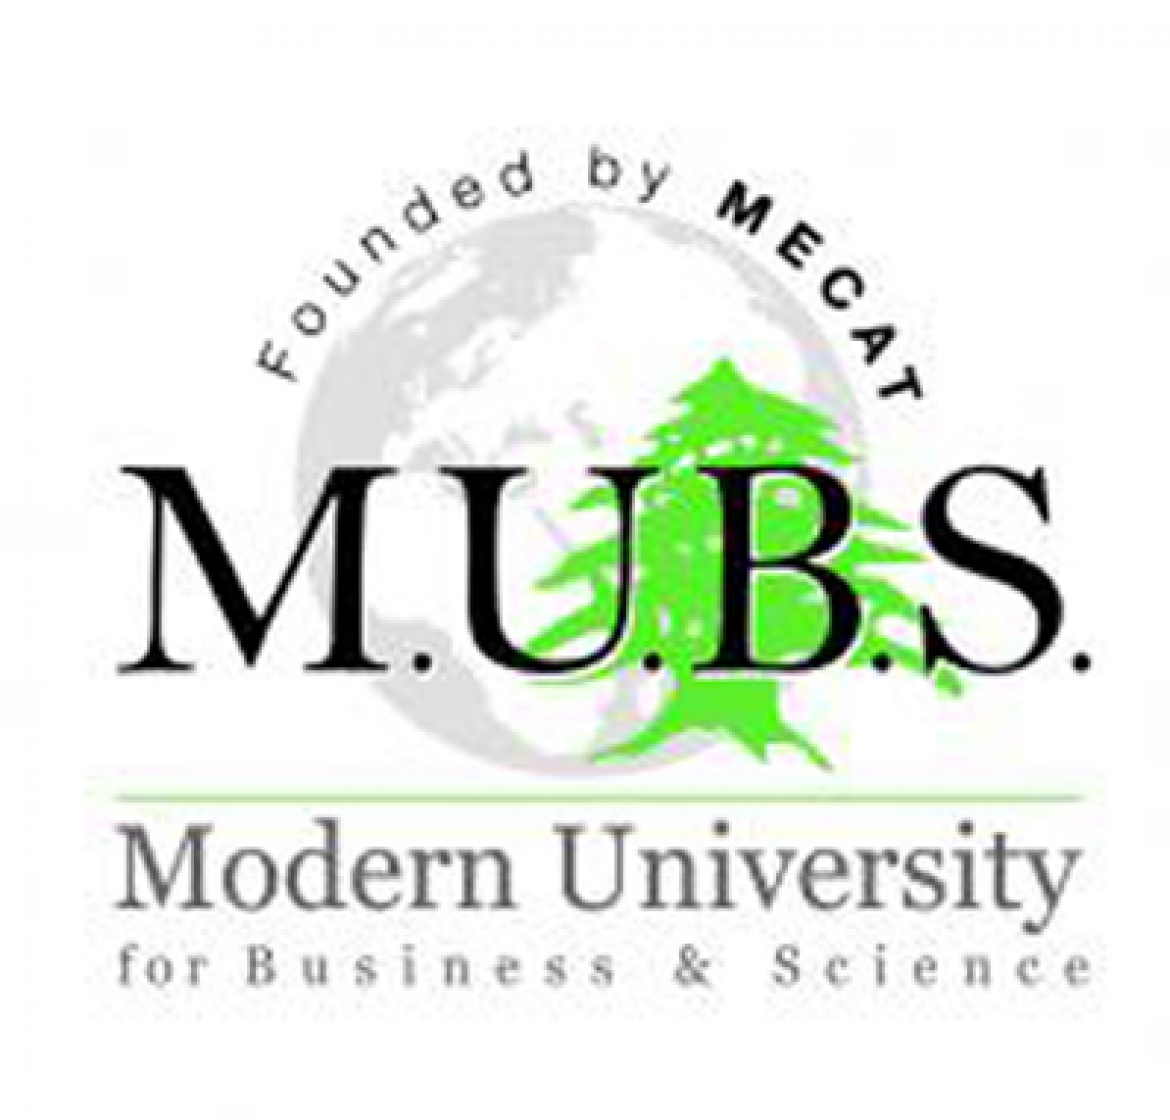 Modern University for Business & Science, M.U.B.S.